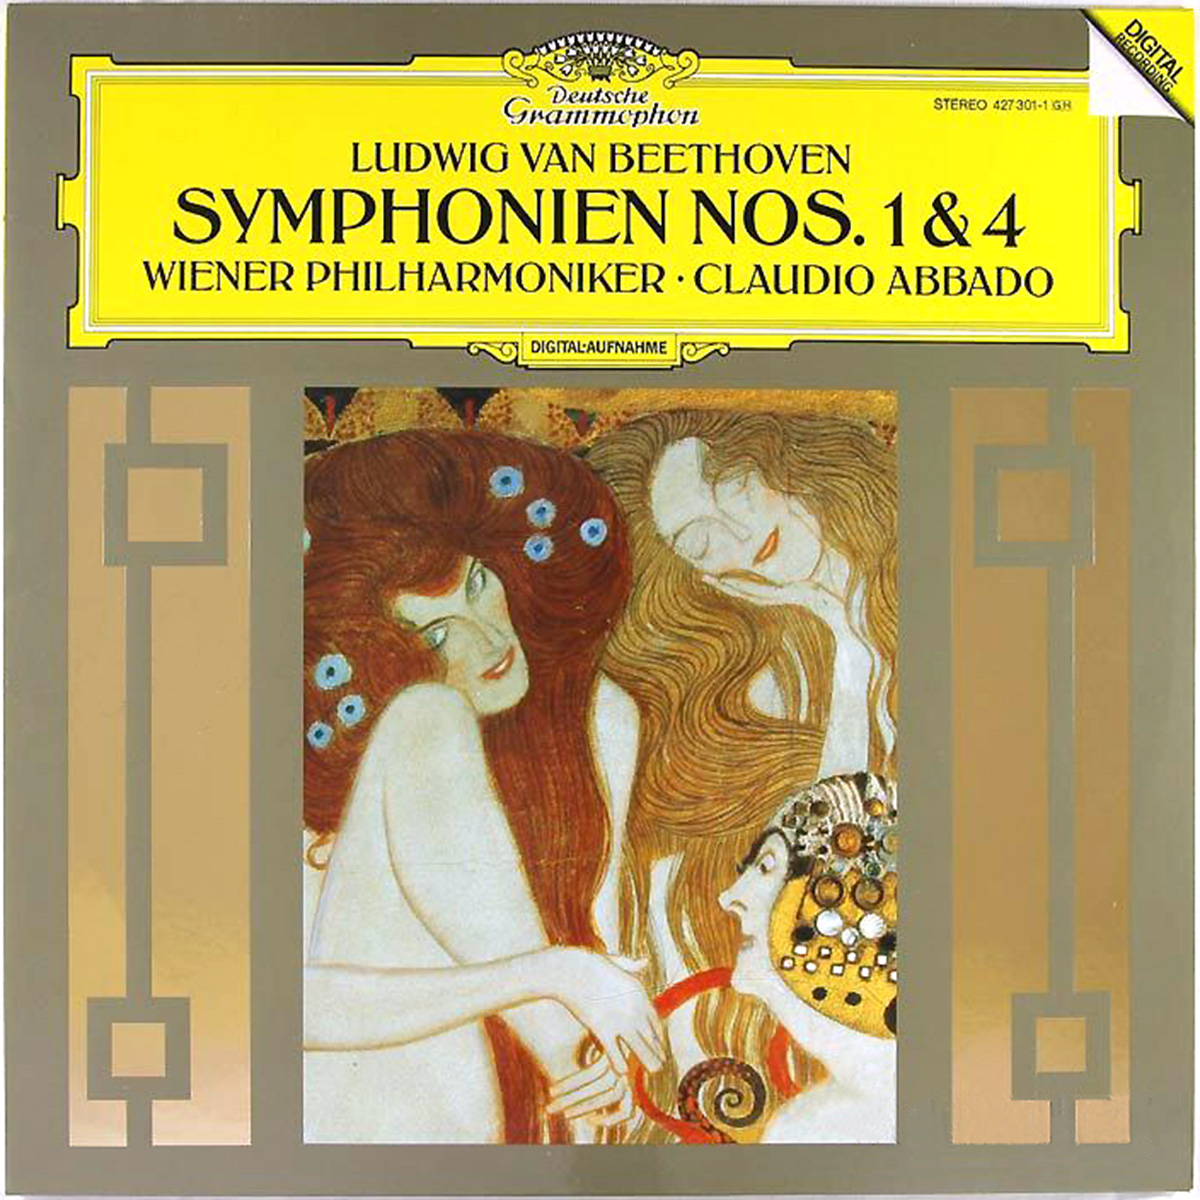 DGG 427 301 Beethoven Symphonies 1 4 Abbado DGG Digital Aufnahme